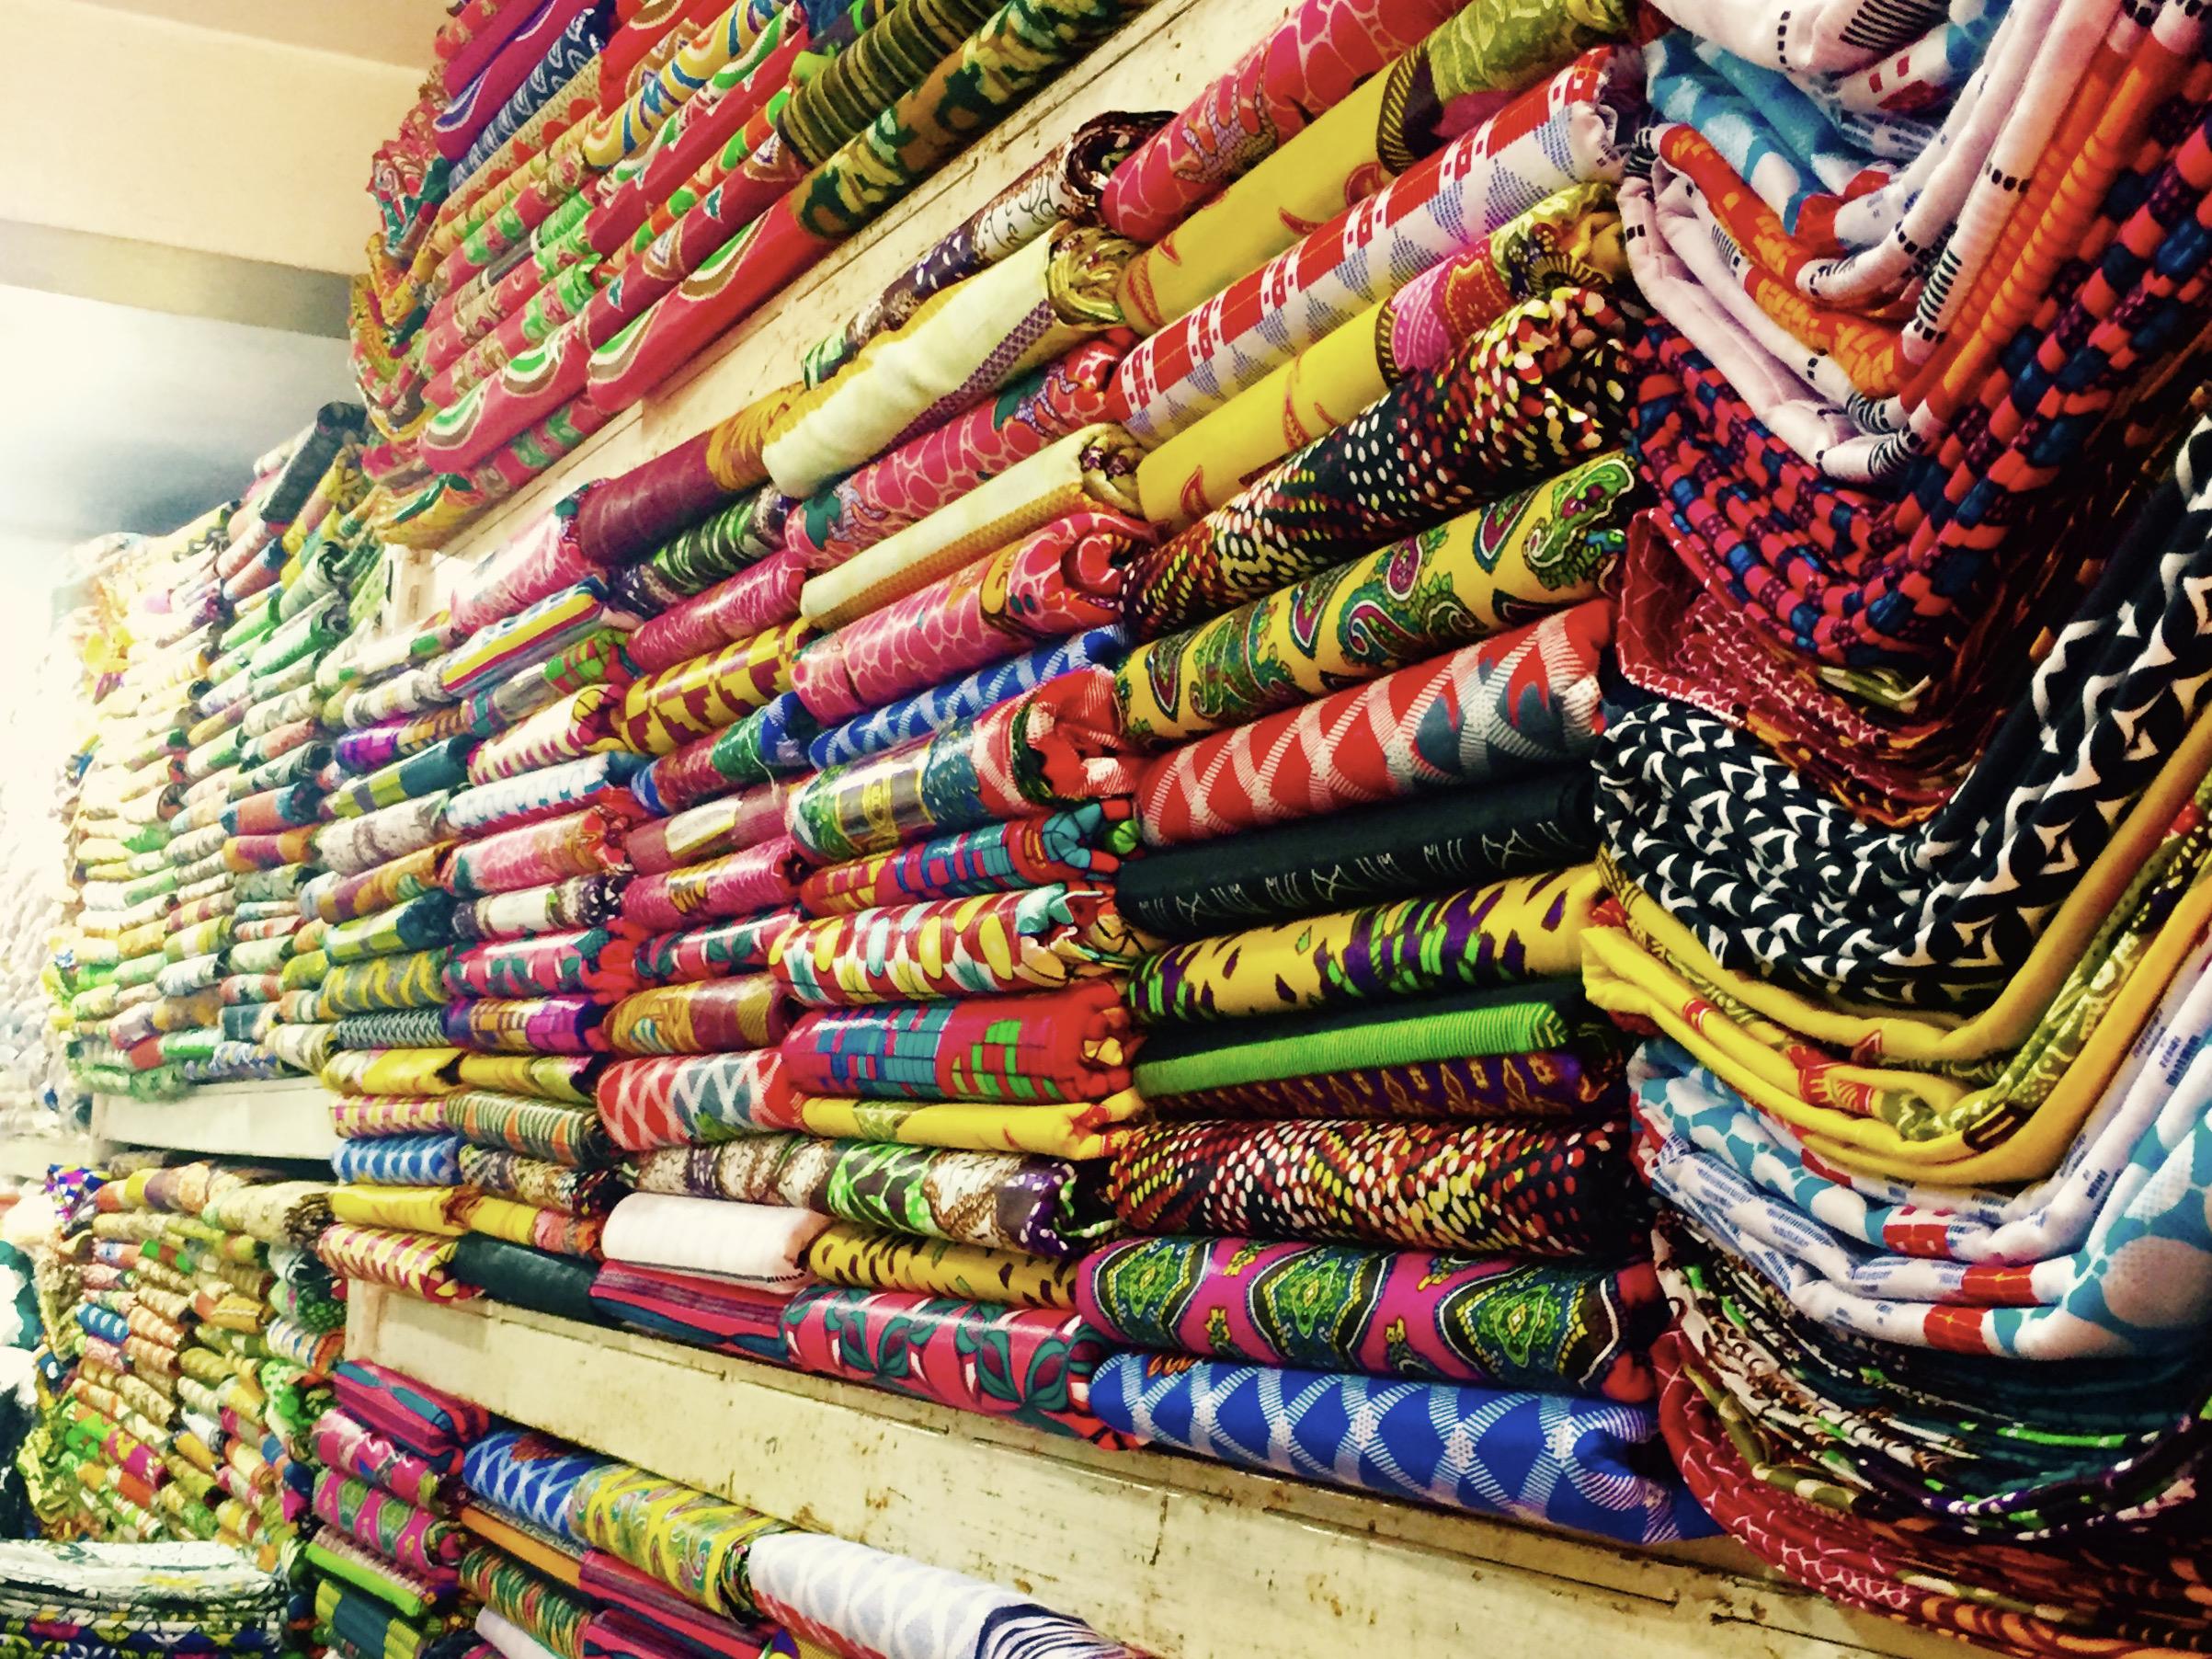 Colourful fabrics for sale in a store in Dakar, Senegal